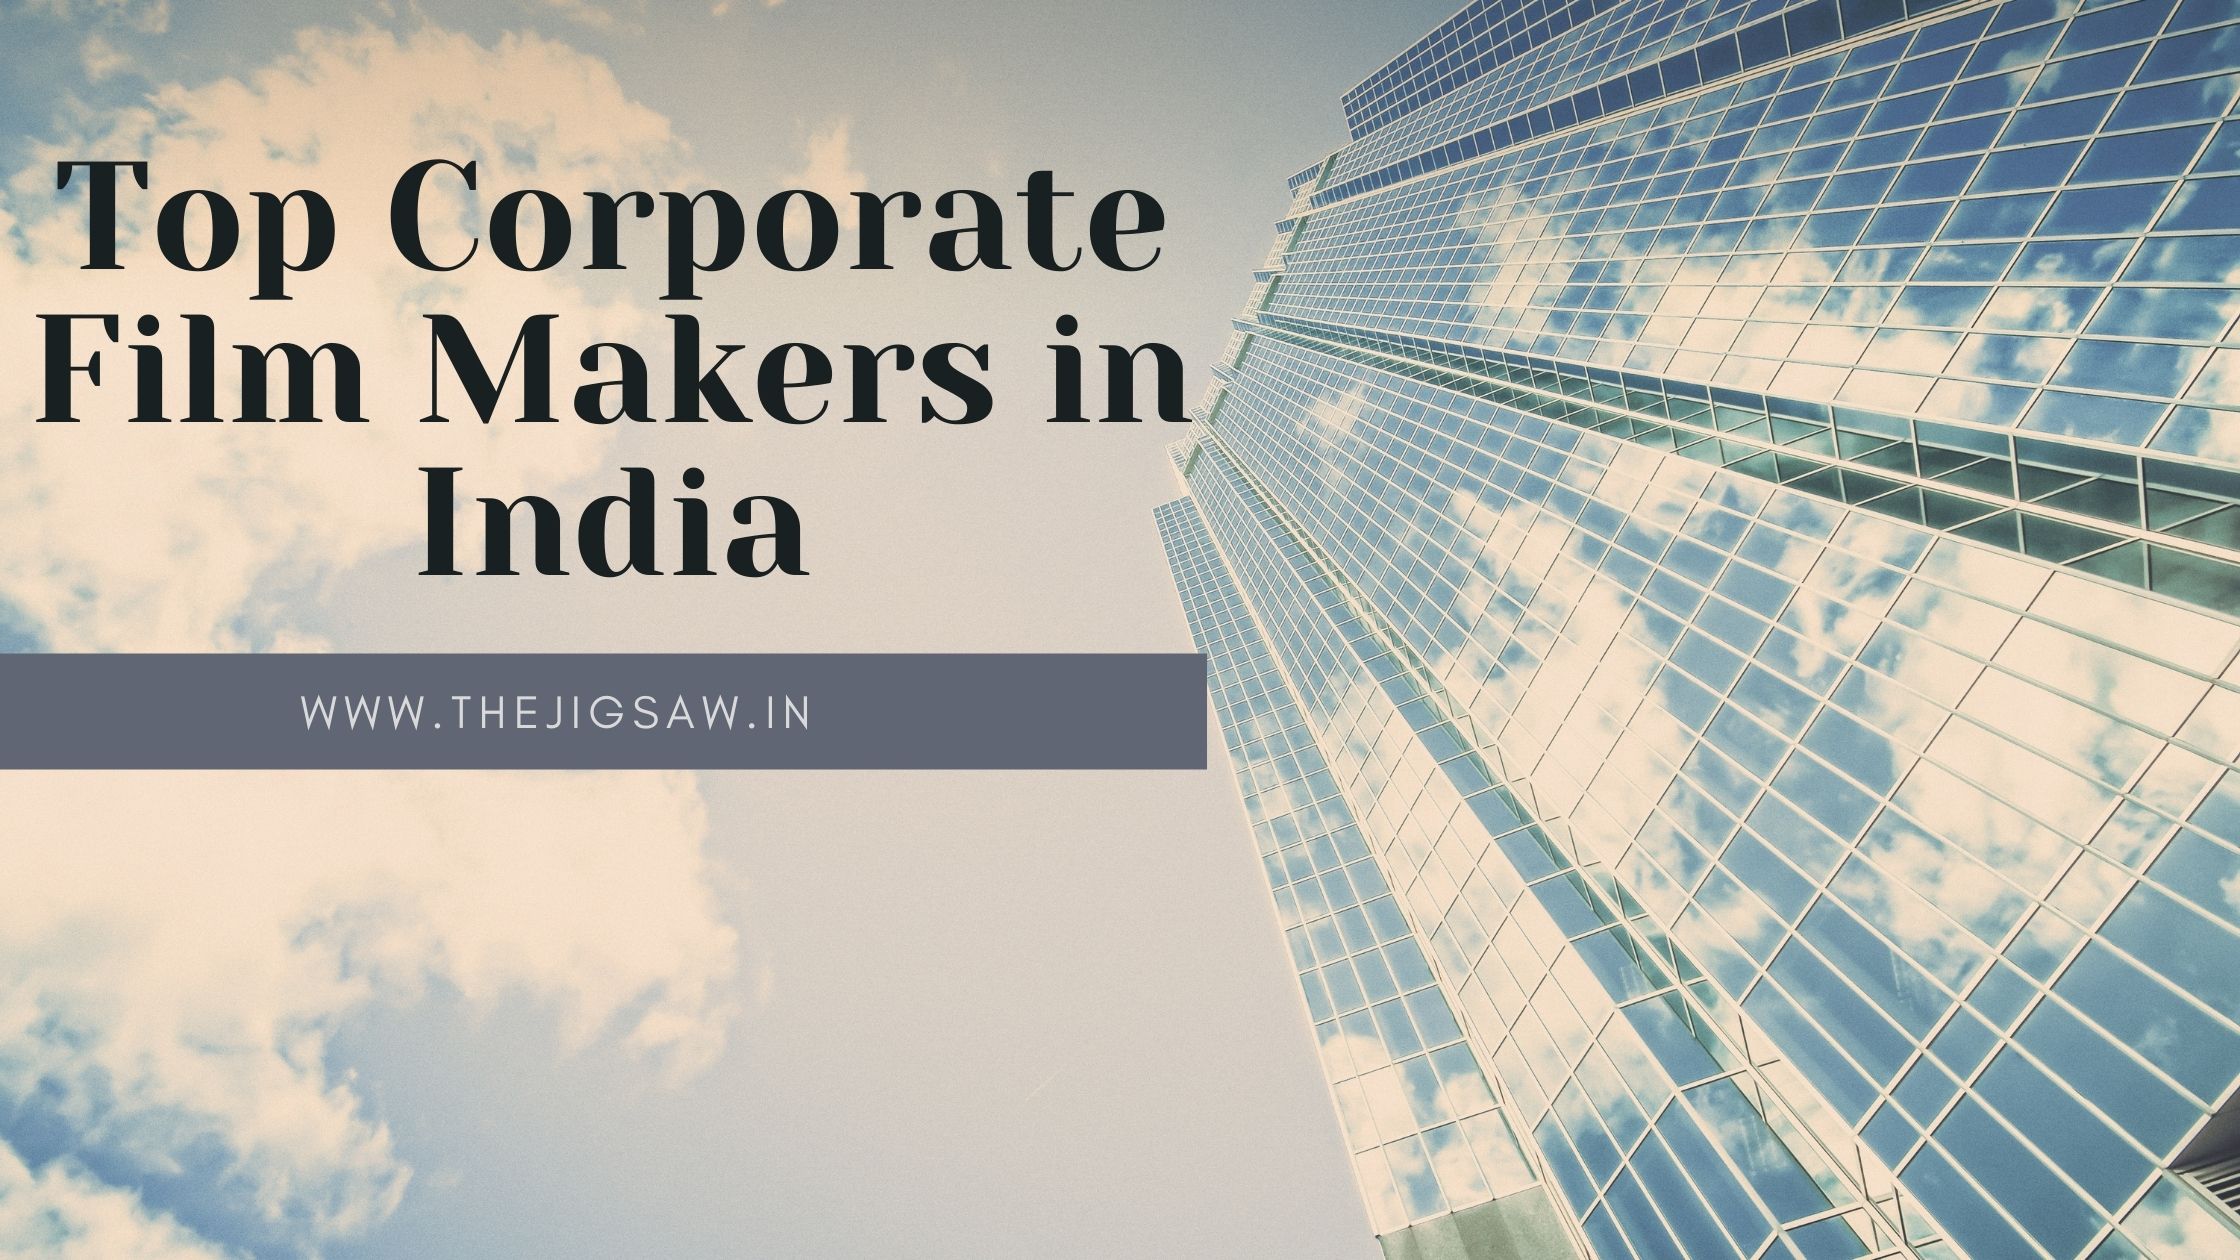 Top Corporate Film Makers in India